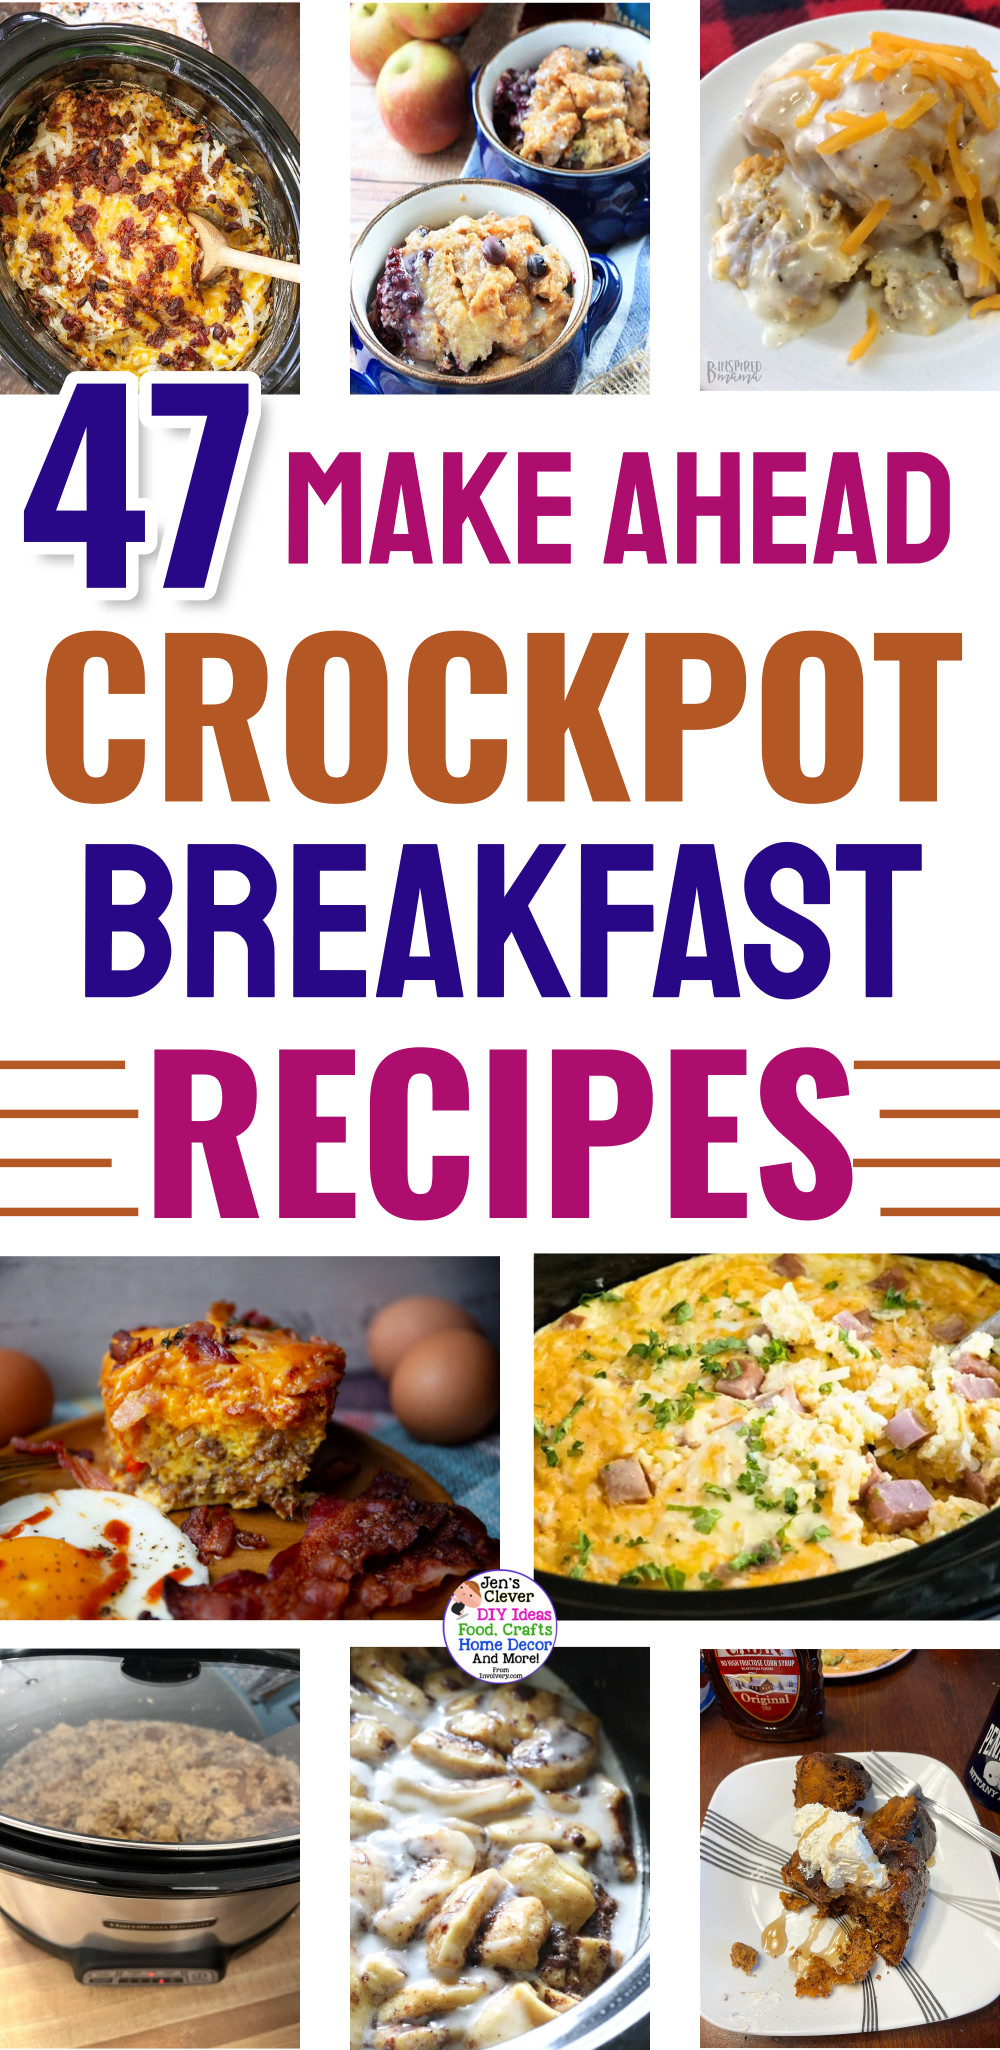 47 Make Ahead Crockpot Breakfast Recipes